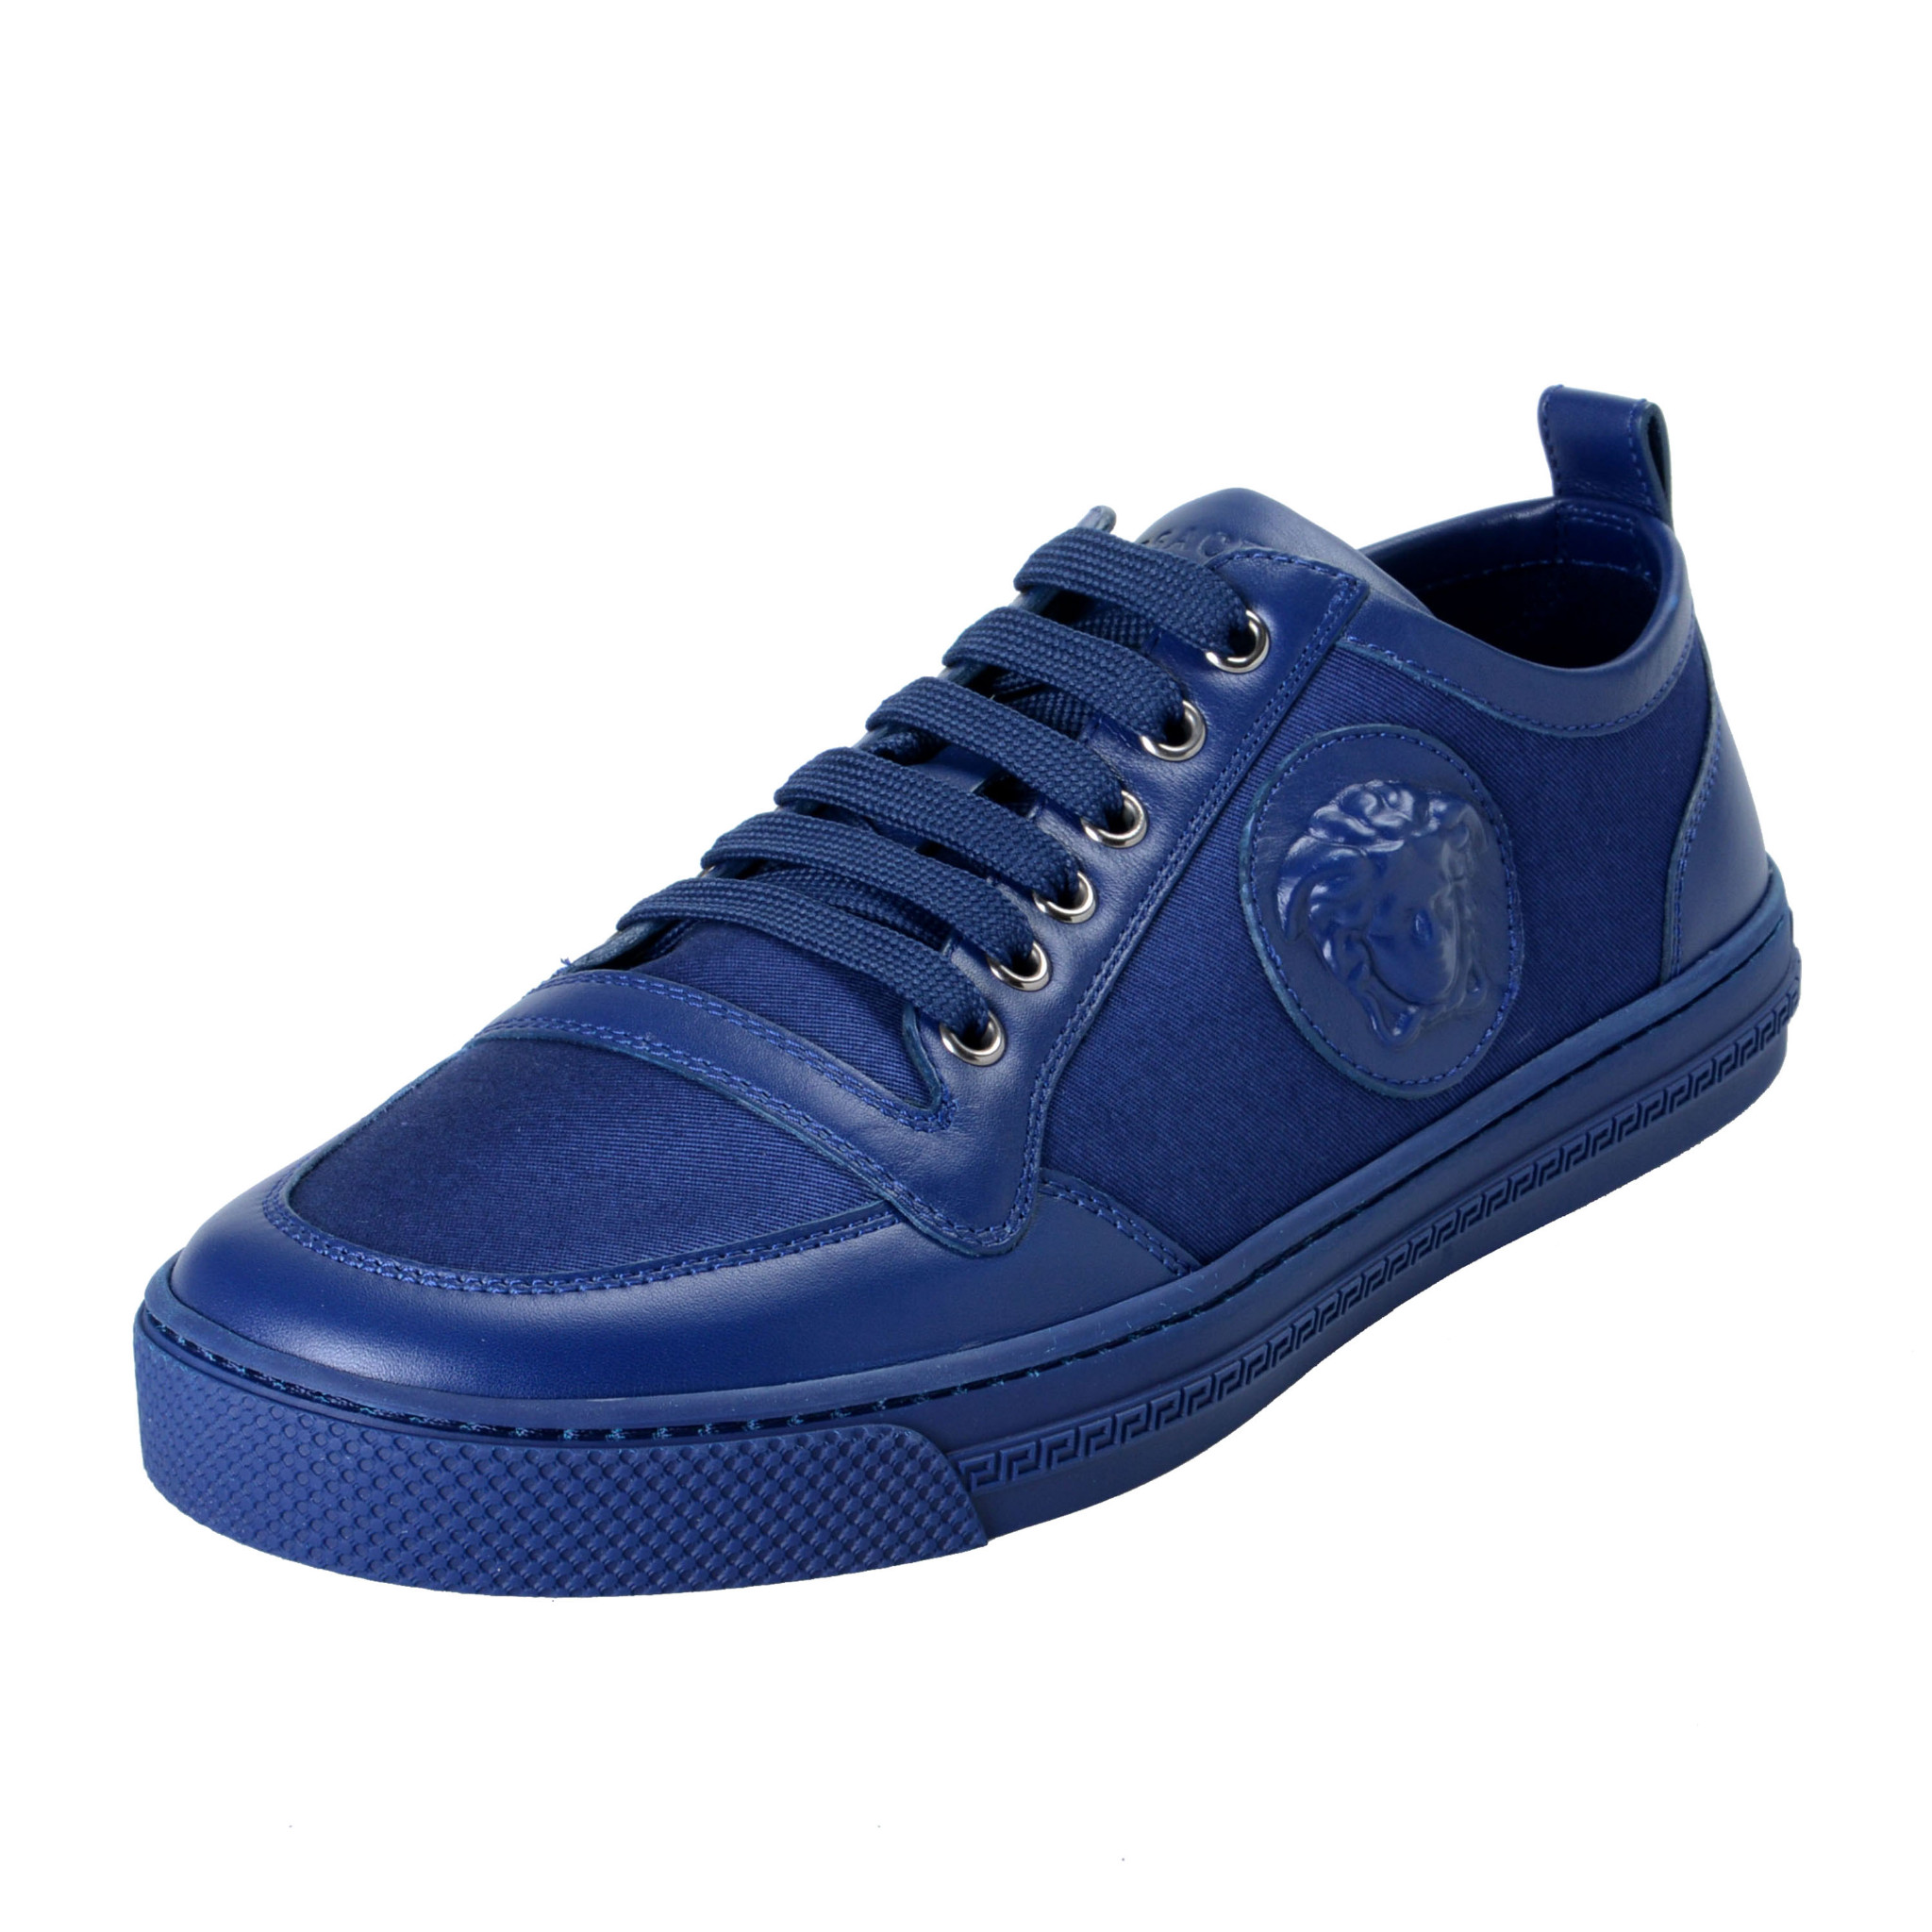 Versace Men's Blue Canvas Leather Medusa Fashion Sneakers Shoes | eBay